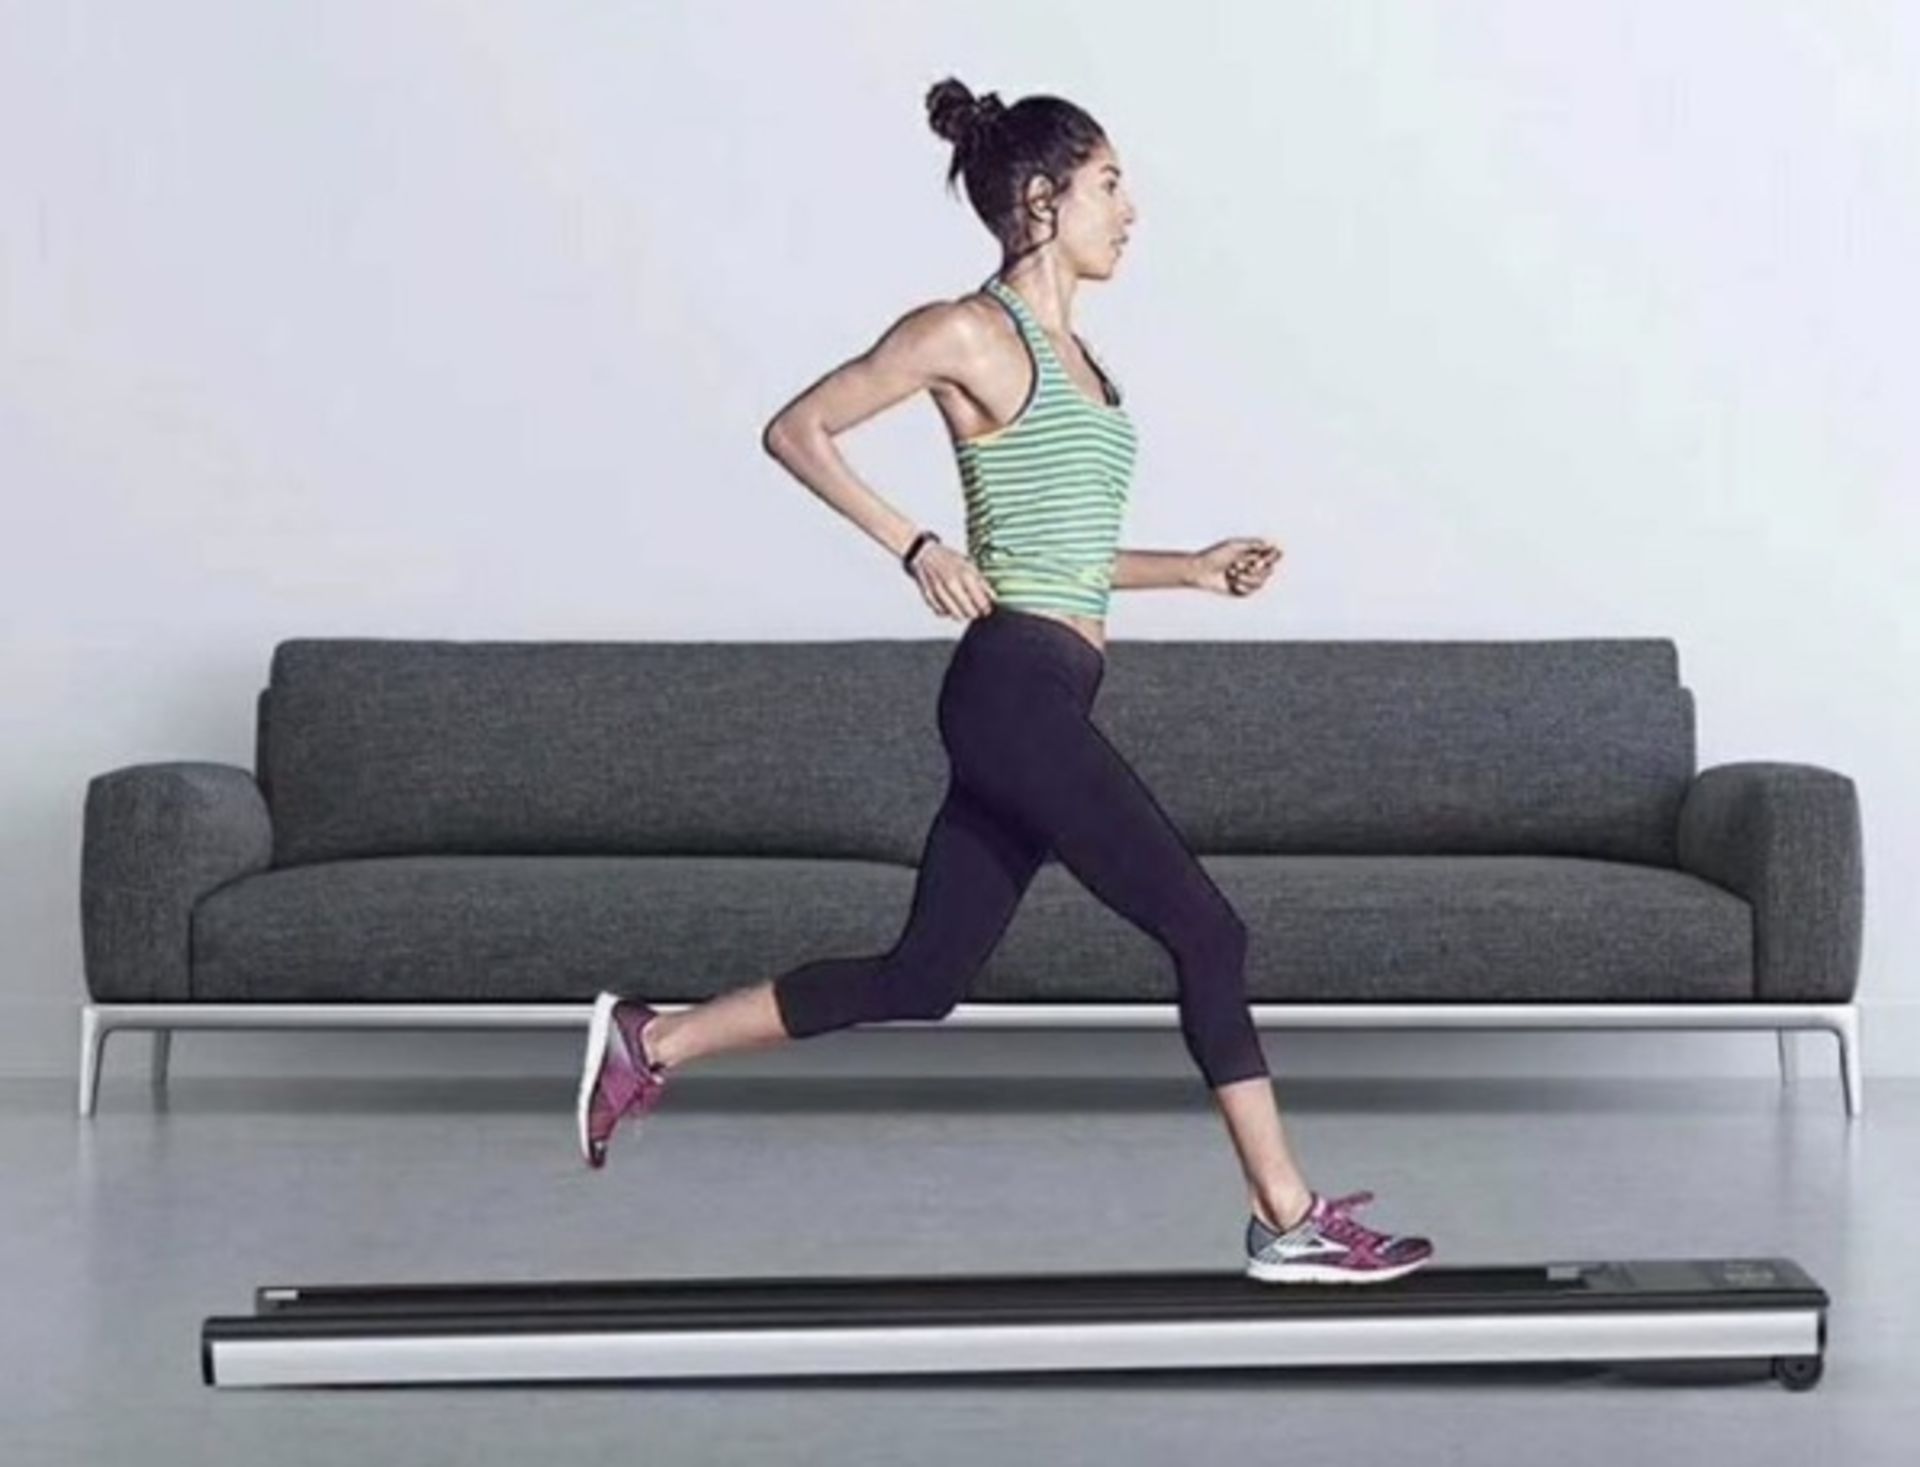 1 x Slim Tread Ultra Thin Smart Treadmill Running / Walking Machine - Lightweight With Folding - Image 10 of 15